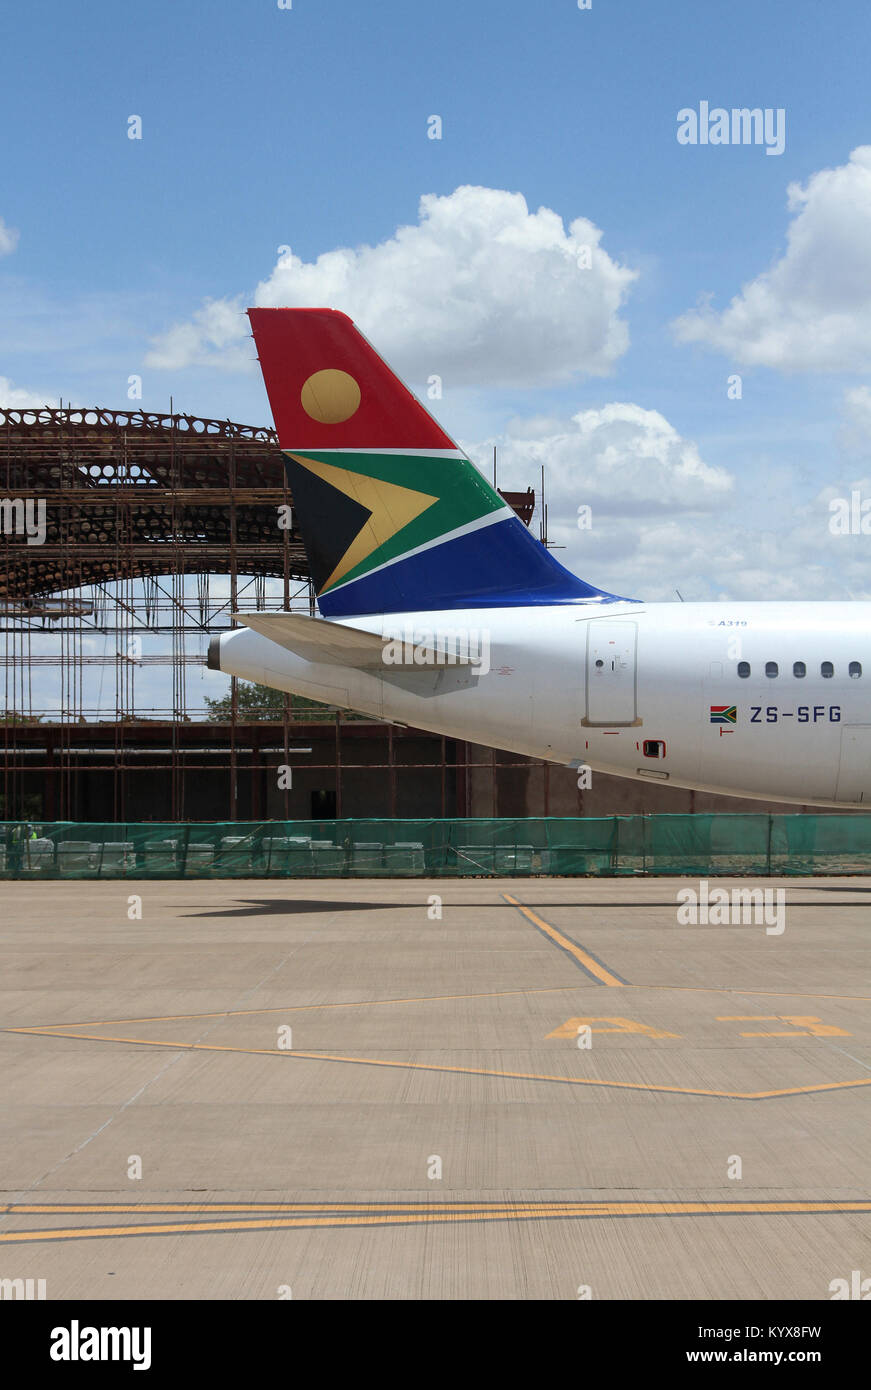 South African Airways, SAA, tail of A319 Airbus Family narrow-body jet airliner at Harry Mwanga Nkumbula International Airport, Livingstone, Zambia. Stock Photo